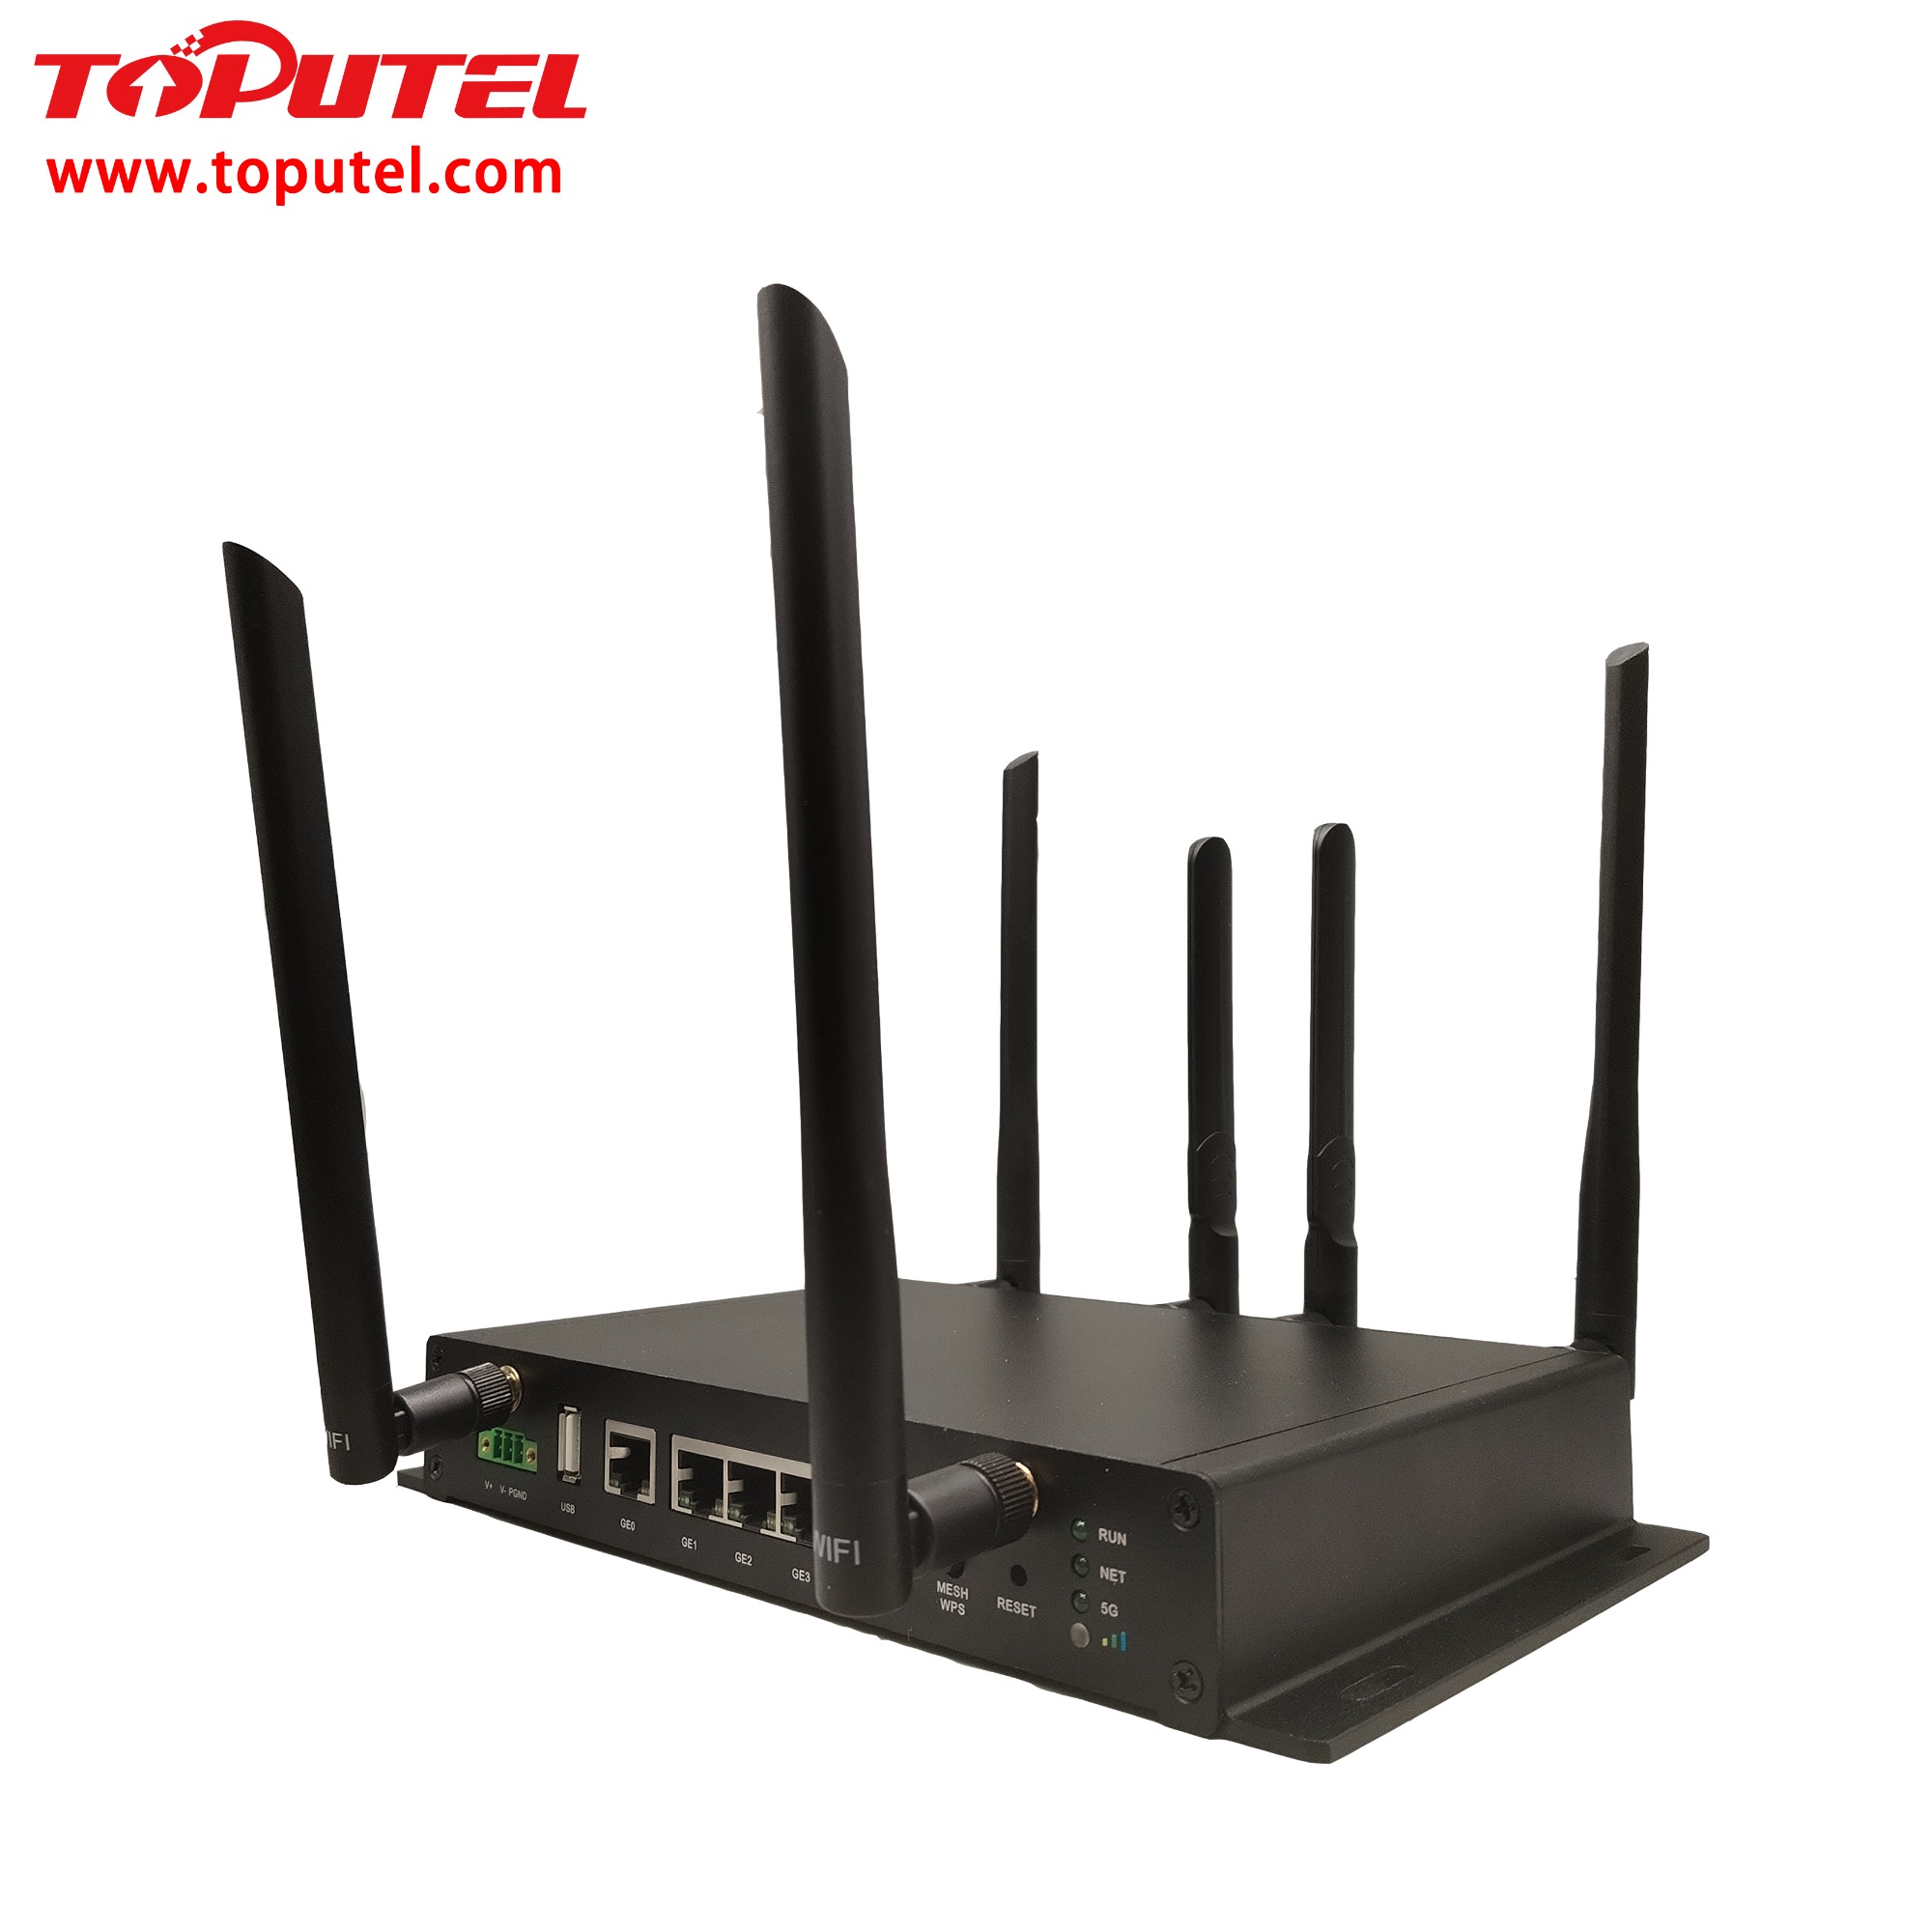 Long range WiFi  router RG4000-W4M industrial 4G WiFi router